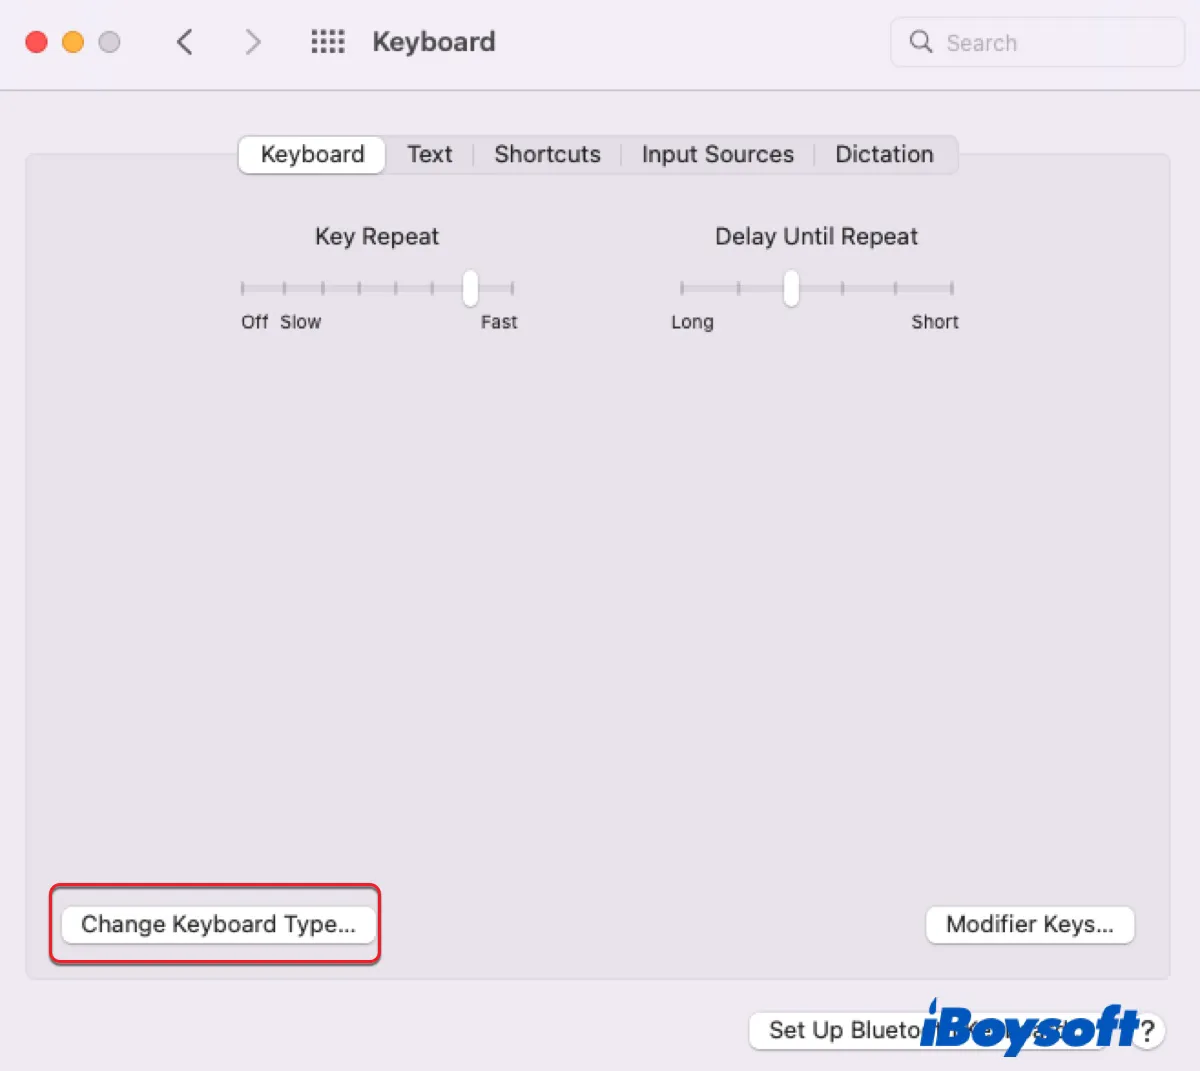 Click Change Keyboard Type to start identifying the keyboard